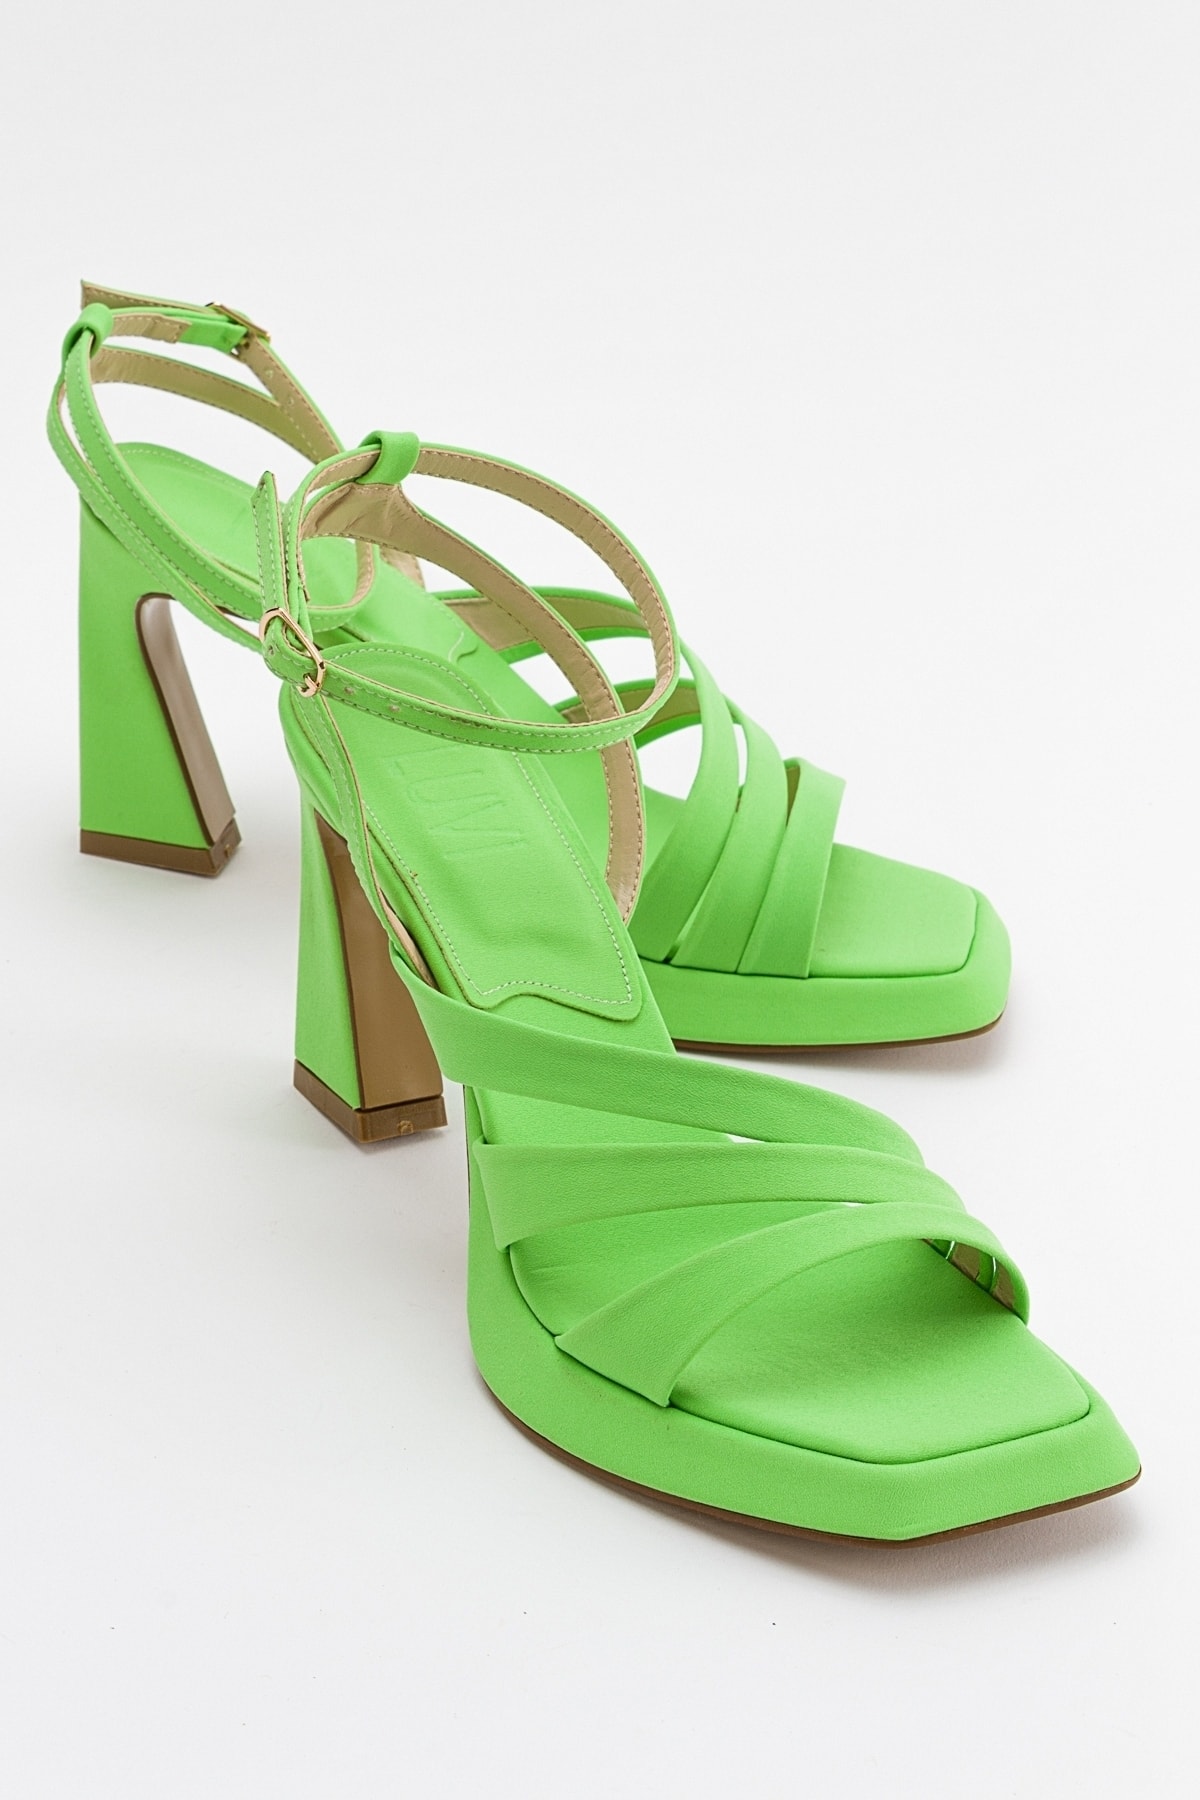 LuviShoes Flores Women's Pistachio Heeled Shoes